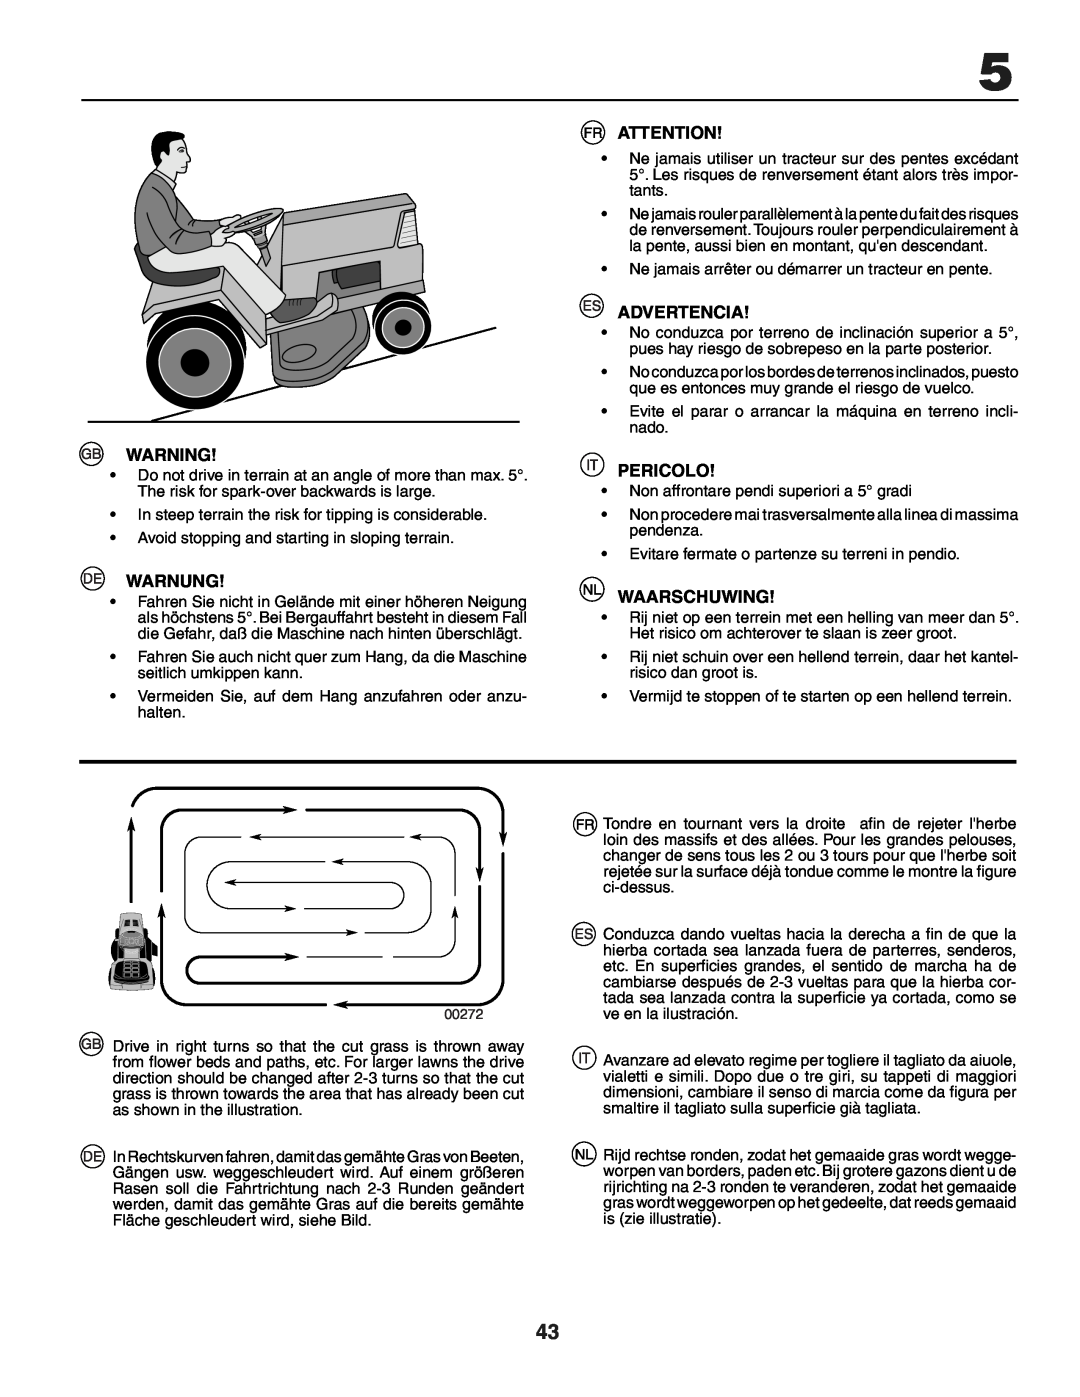 Jonsered LT2118A instruction manual Advertencia, Pericolo, Warnung, Waarschuwing 